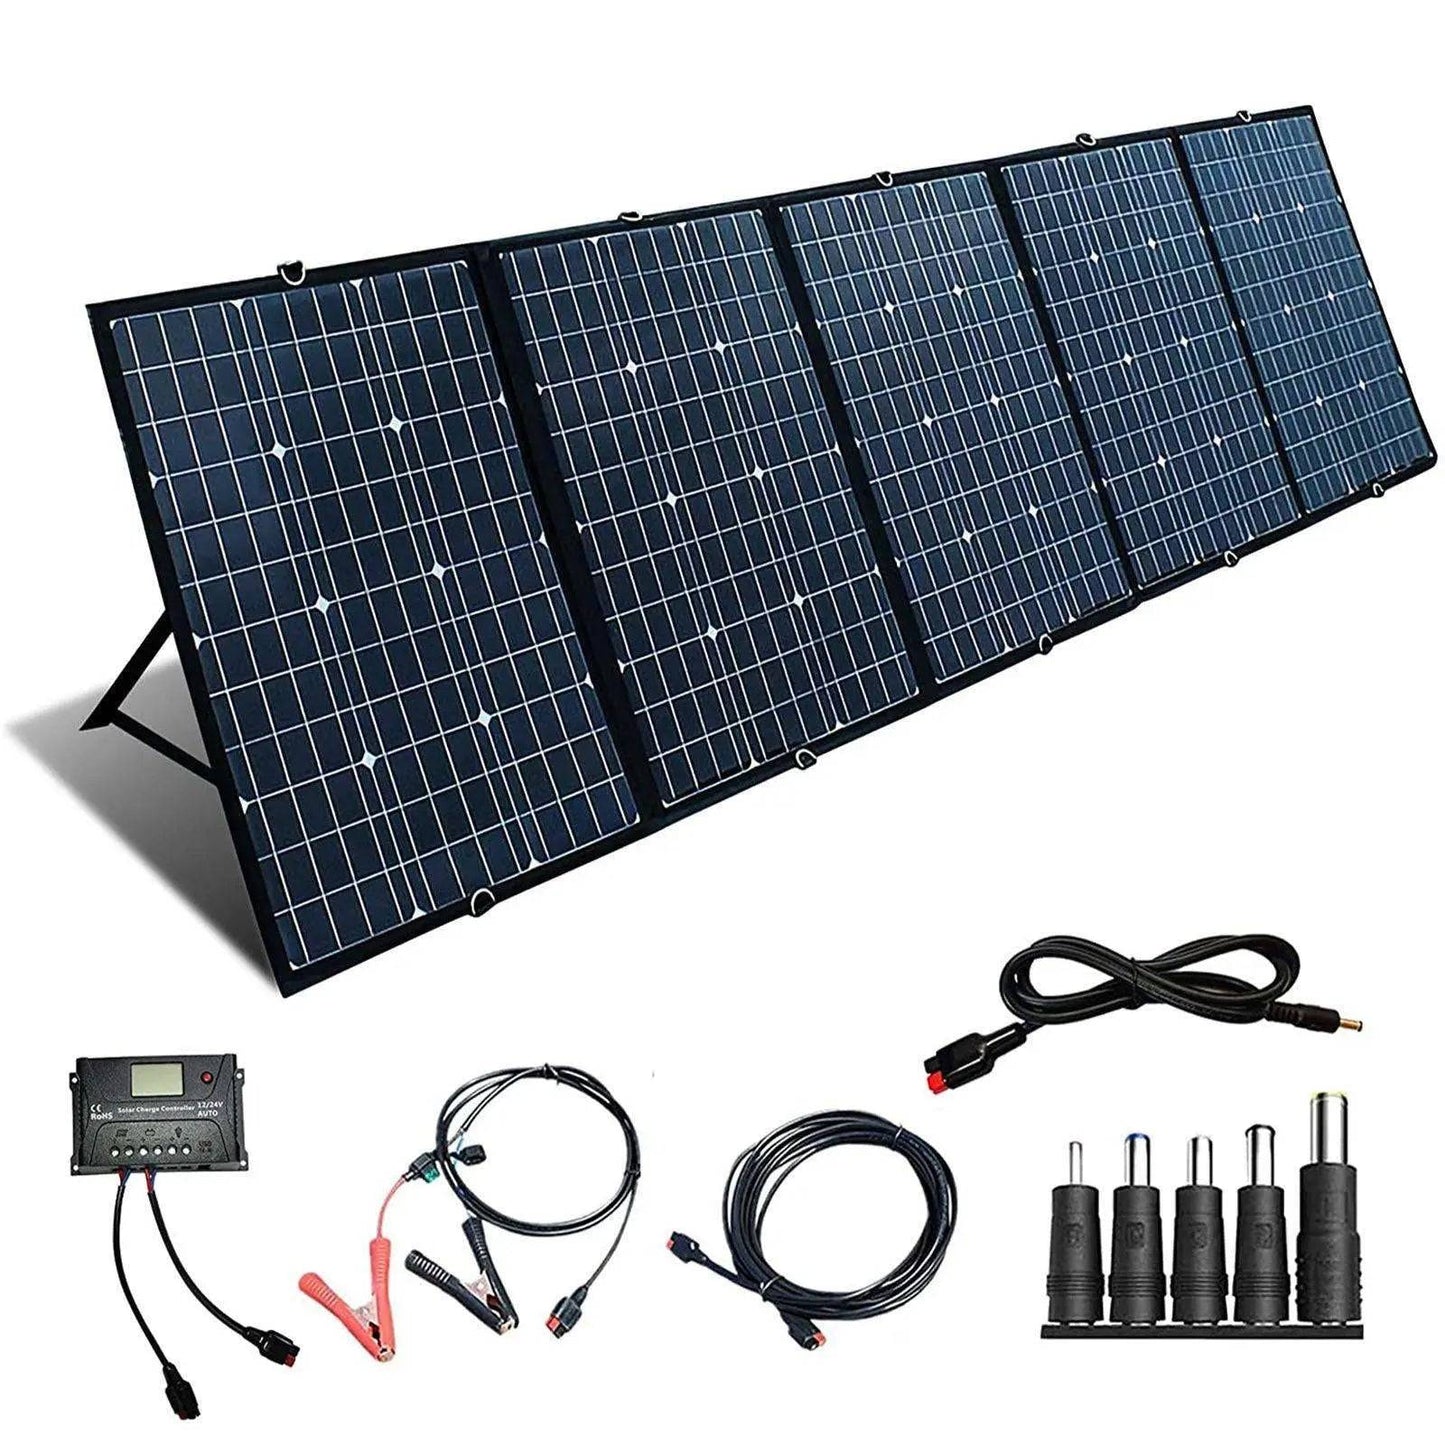 Solar Panel 300W 240W 180W 120W Foldable Monocrystalline 12V Portable Solar Panel Kit Powerbank/Camping/Boat/Car - 54 Energy - Renewable Energy Store